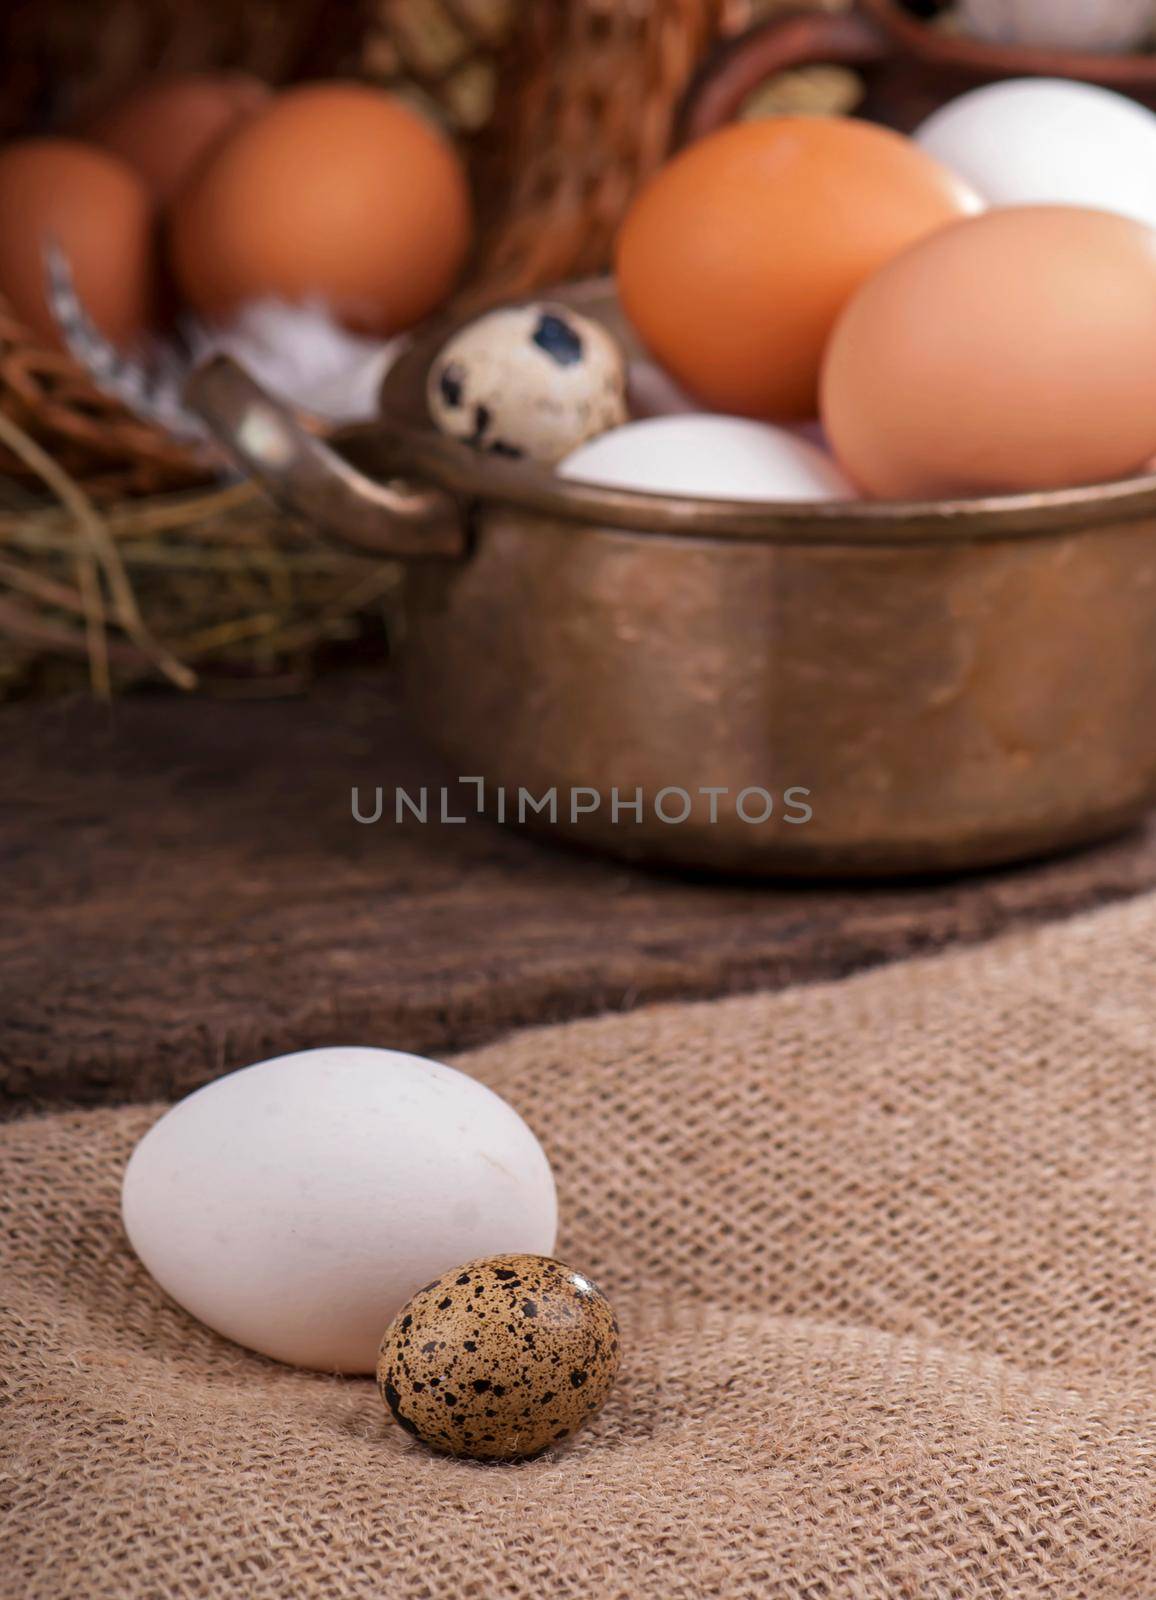 Brown eggs in wooden basket. Broken egg with yolk in background.